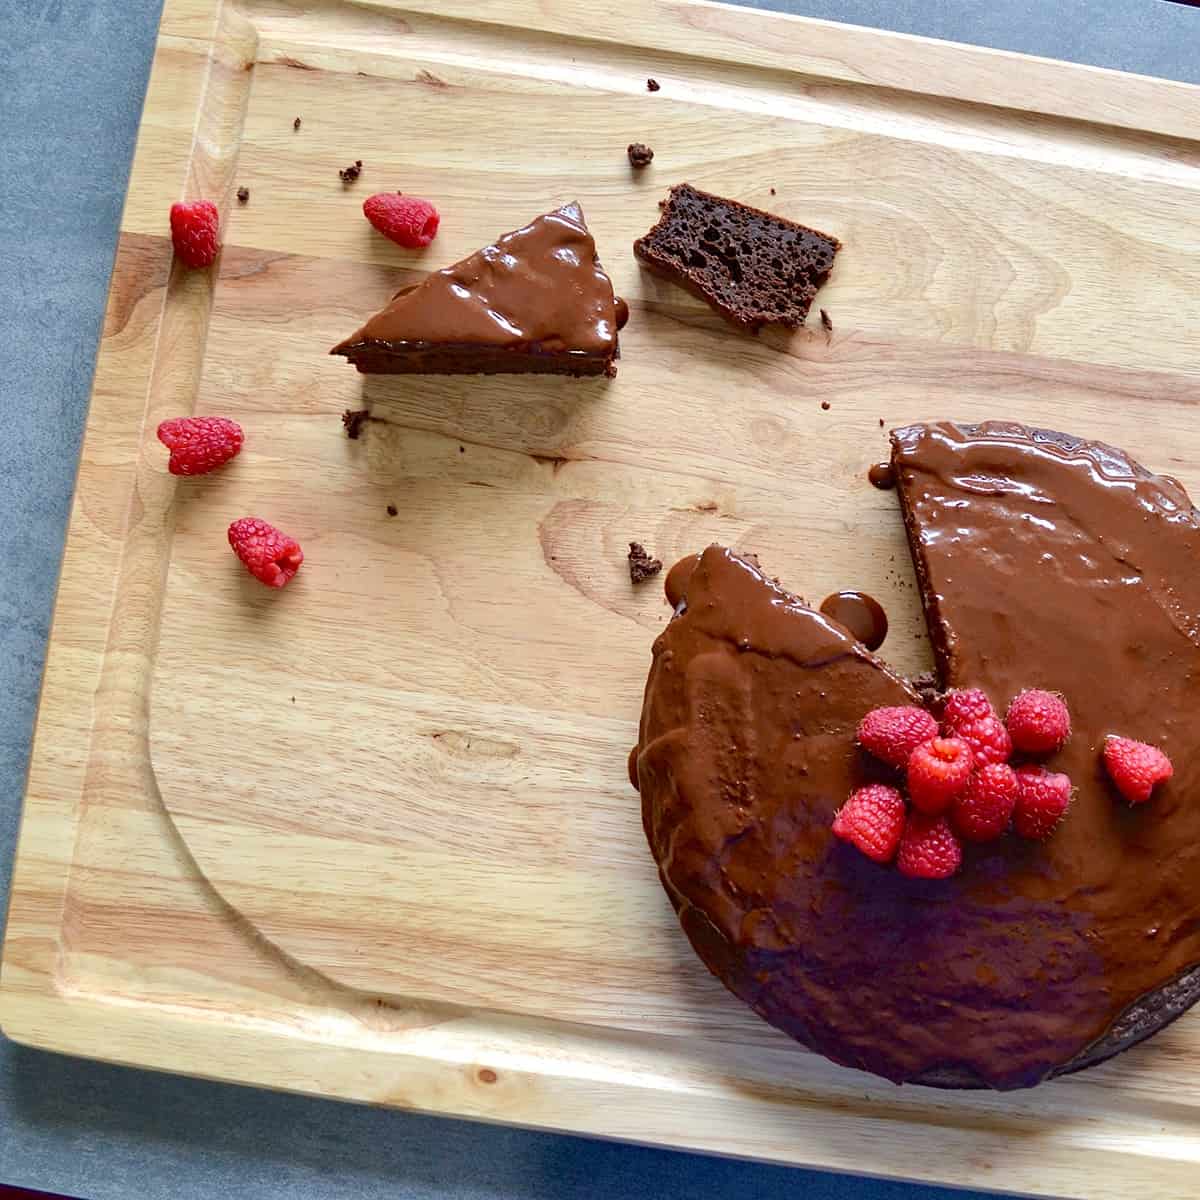 Sliced chocolate mud cake with raspberries